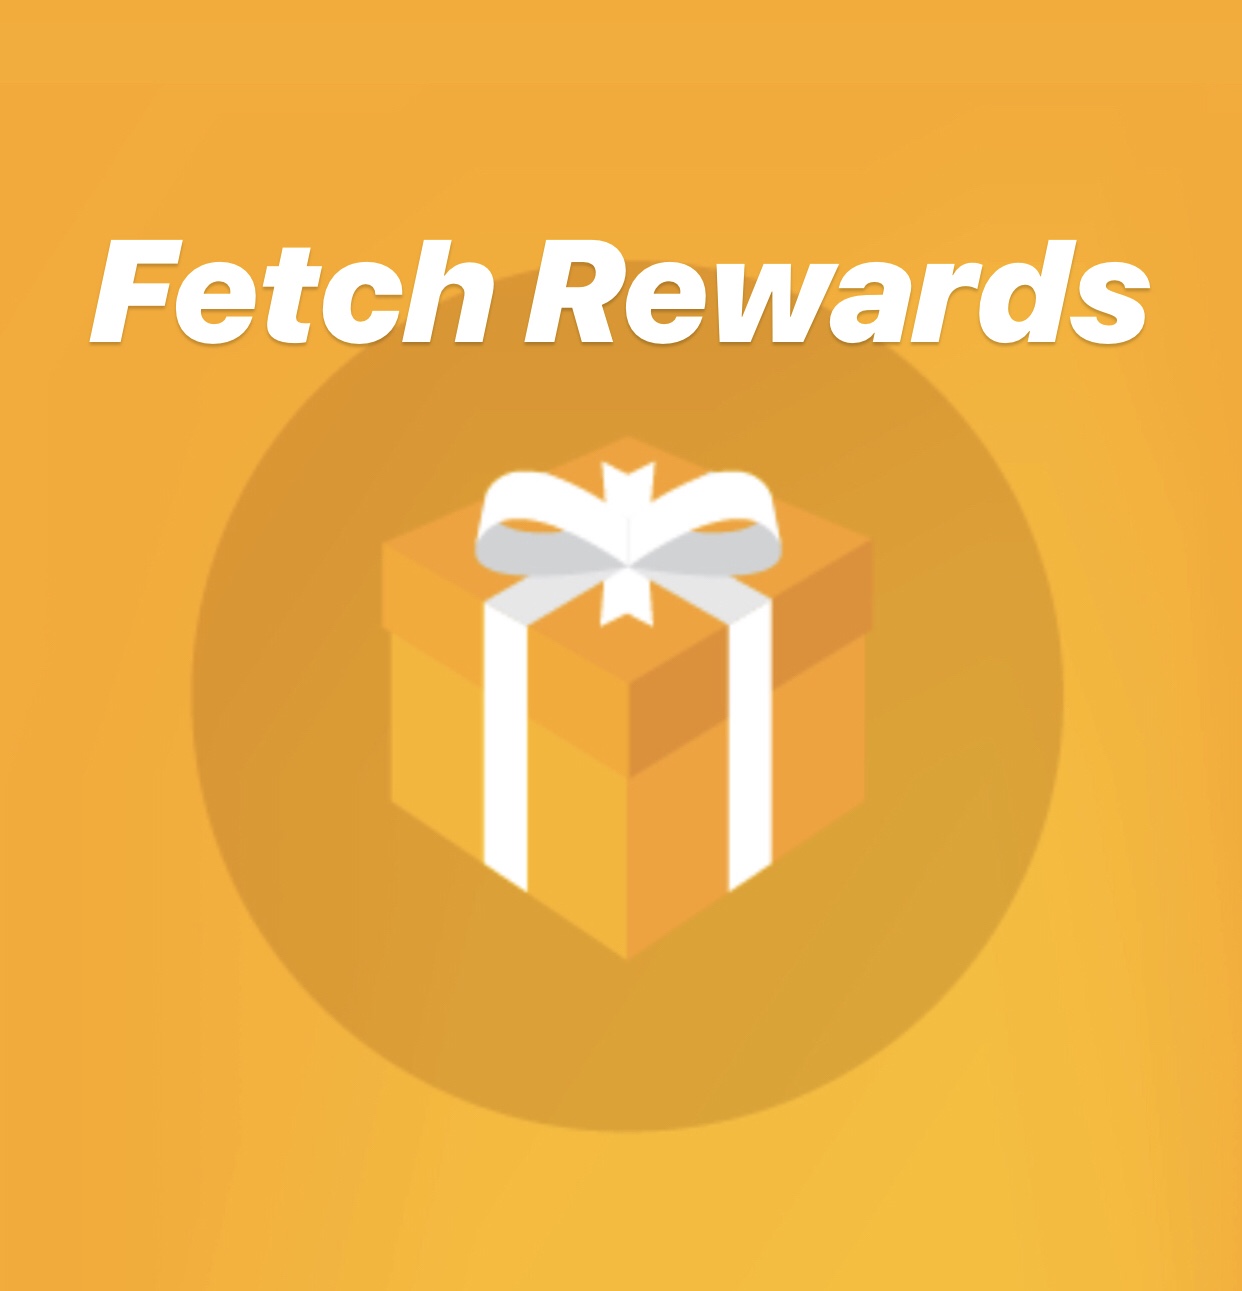 receipts for fetch rewards june 2021